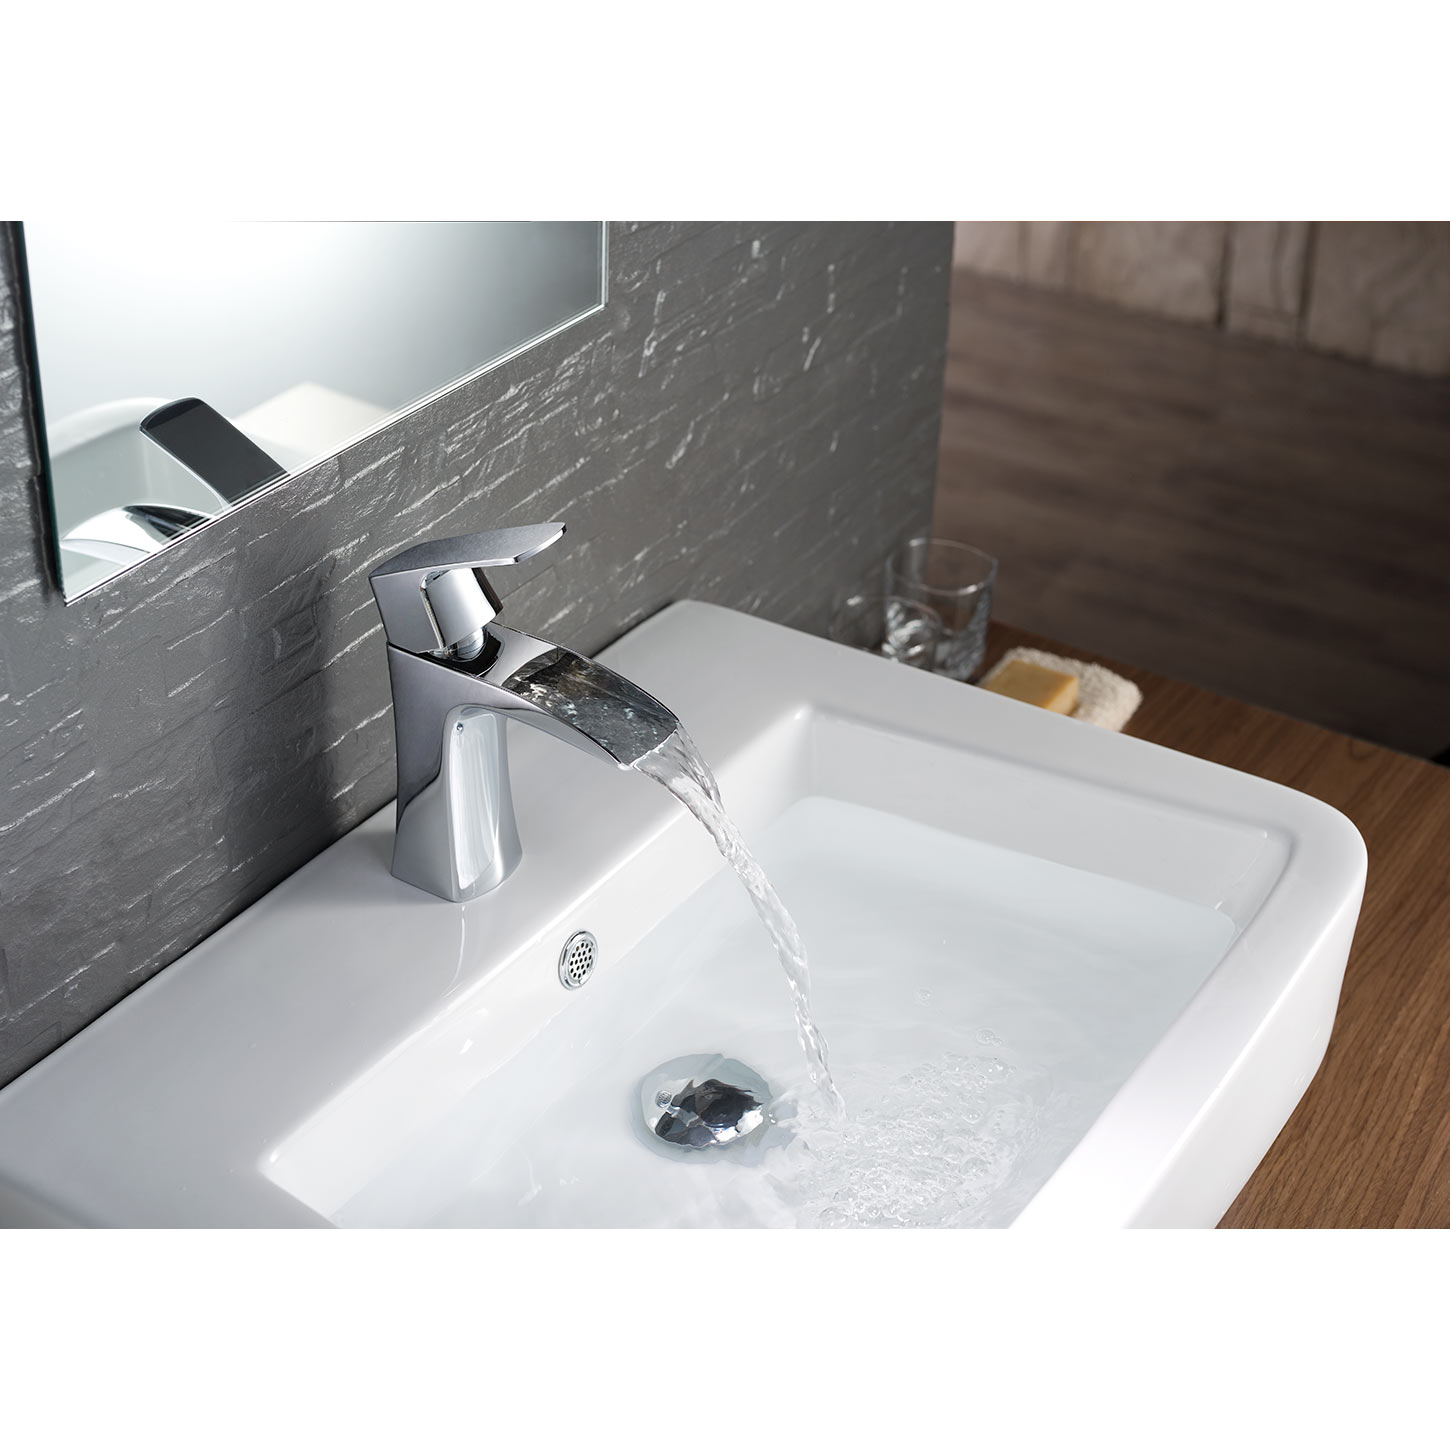 Buy CBI Rainier Bathroom Chrome in AV-BF02CH Single Waterfall Control Faucet on